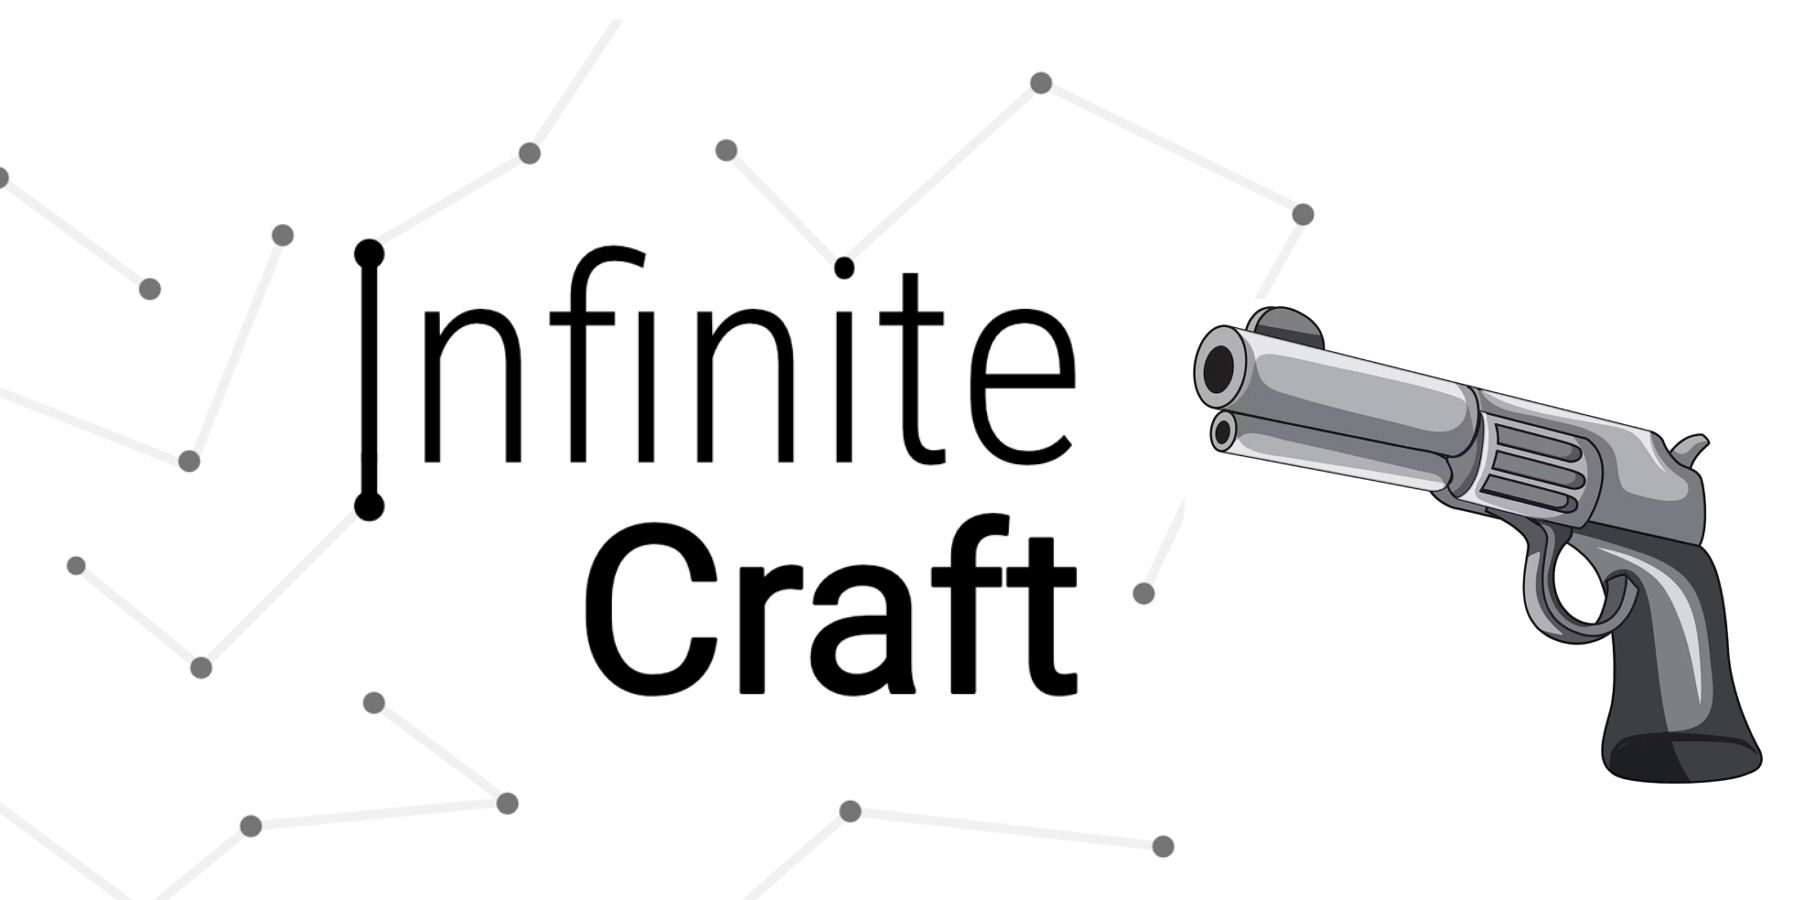 Infinite Craft Gun